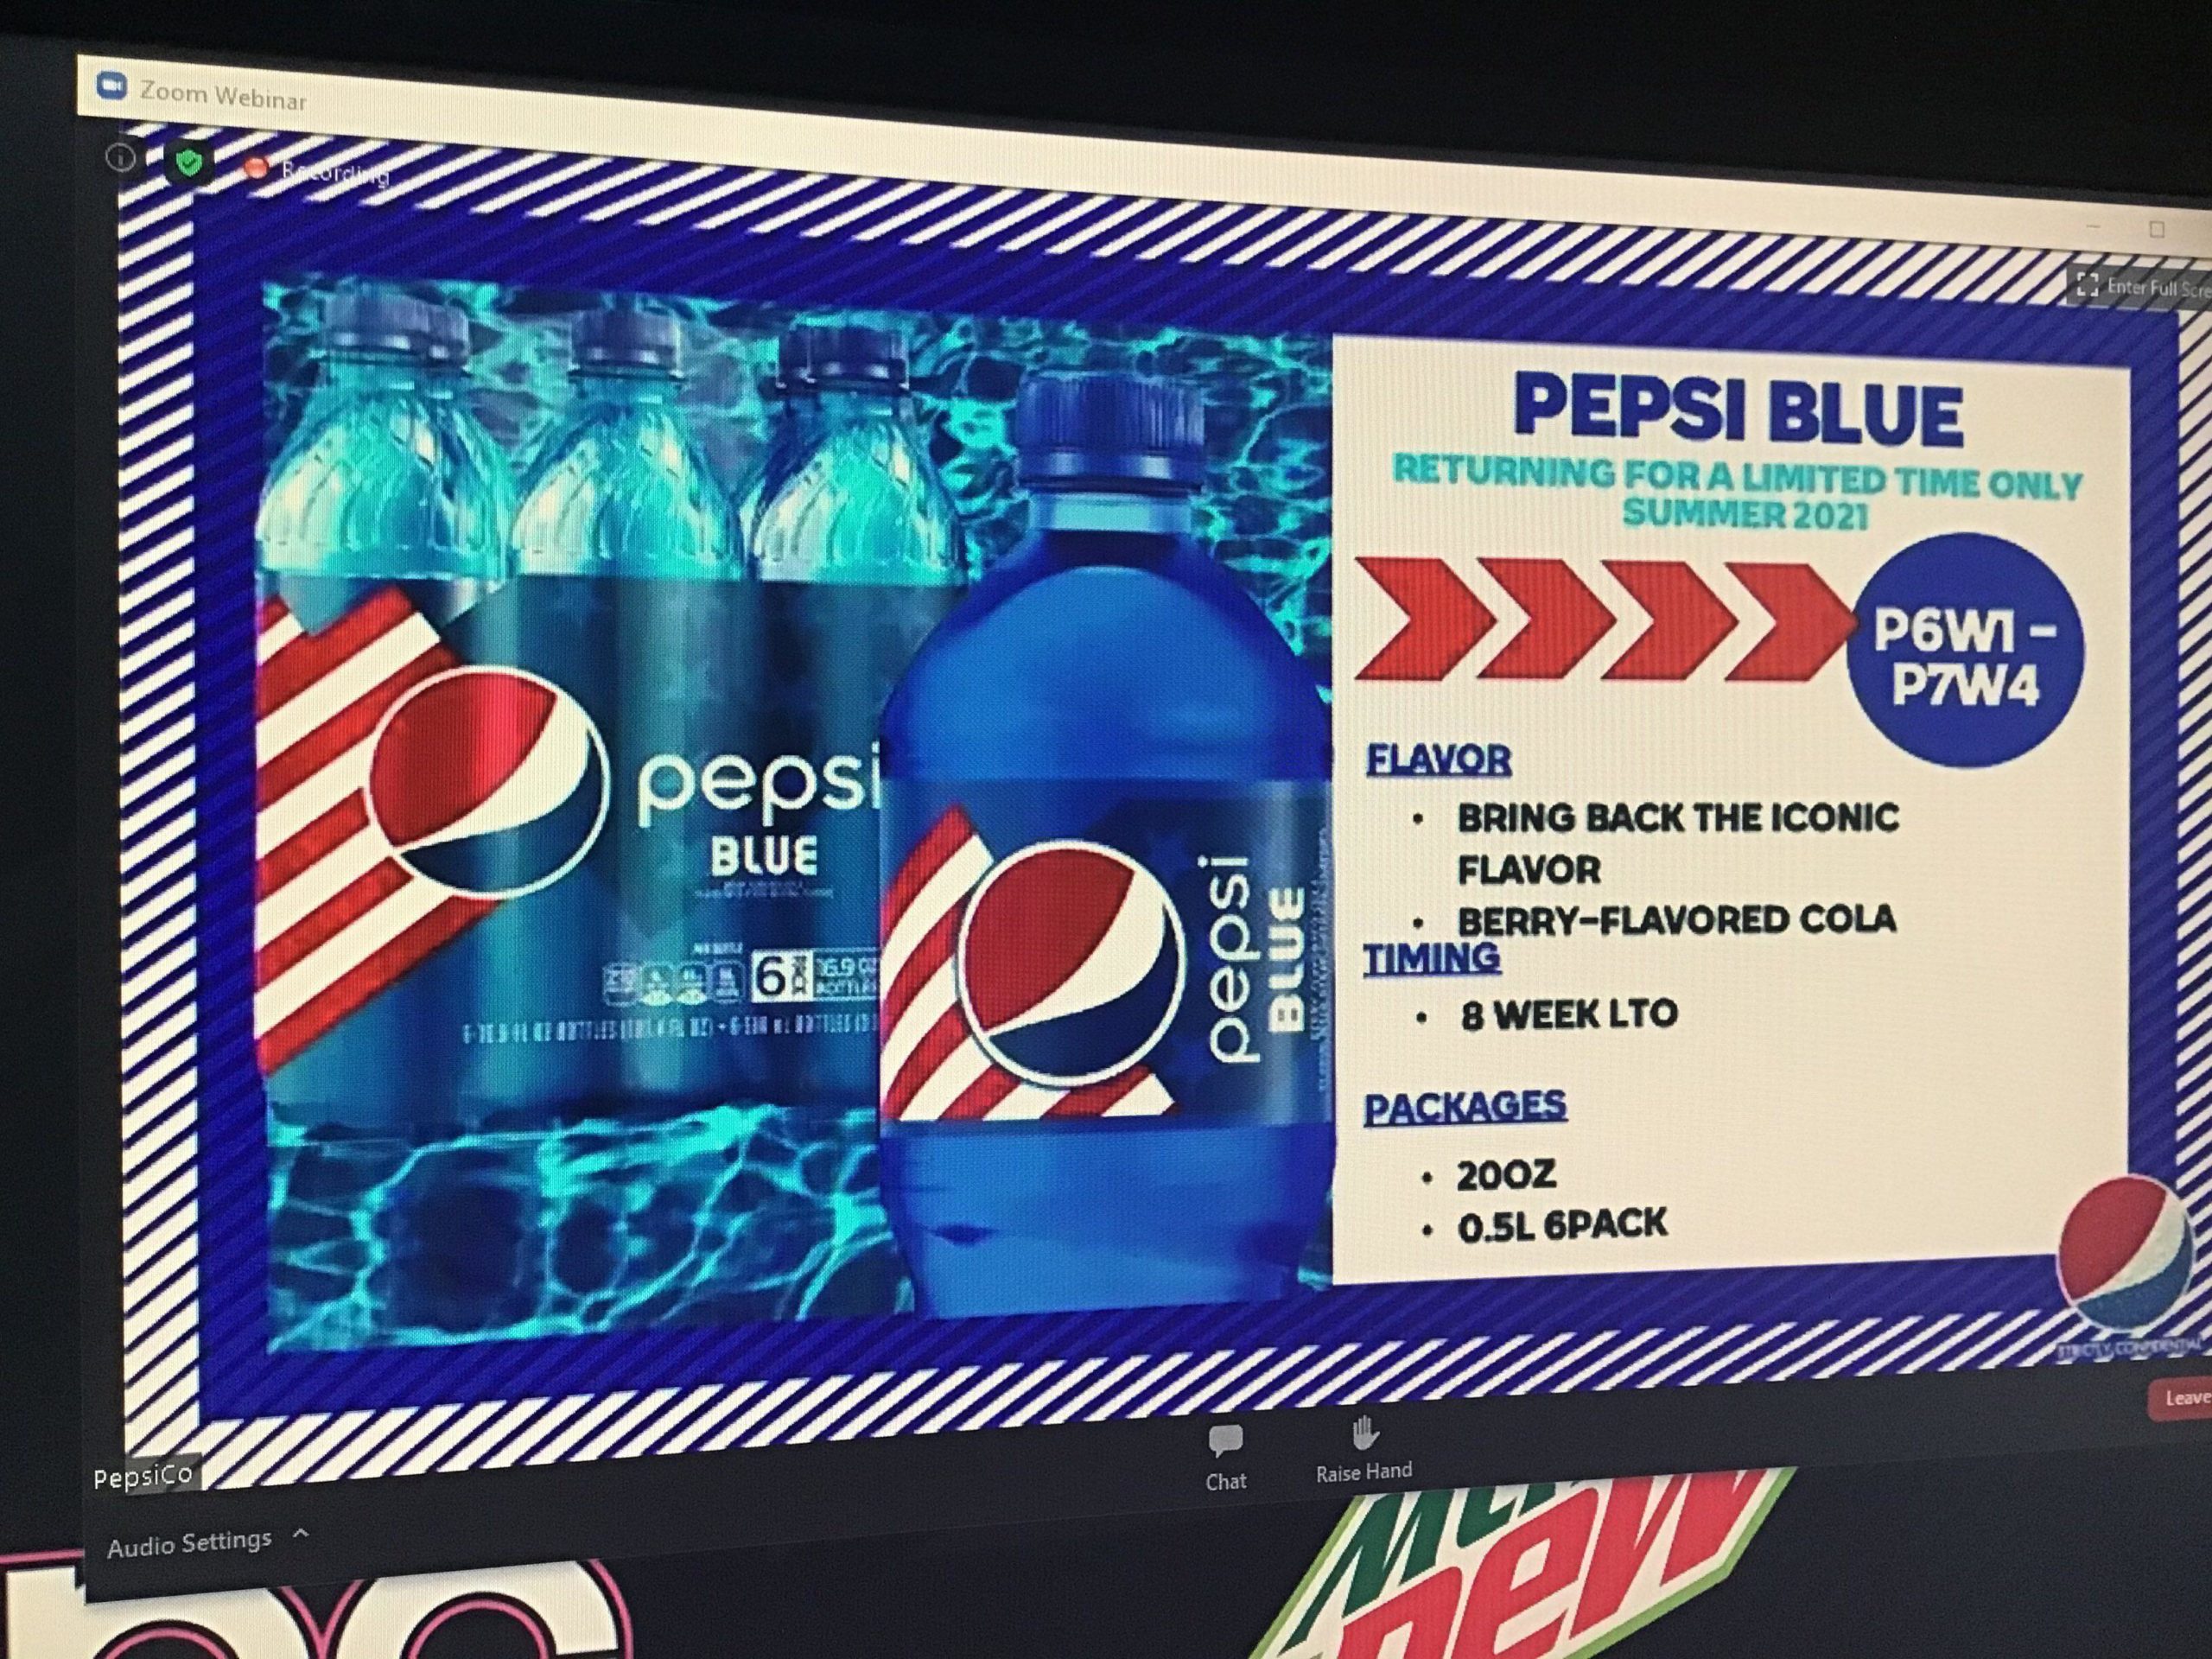 When did Pepsi change its logo?